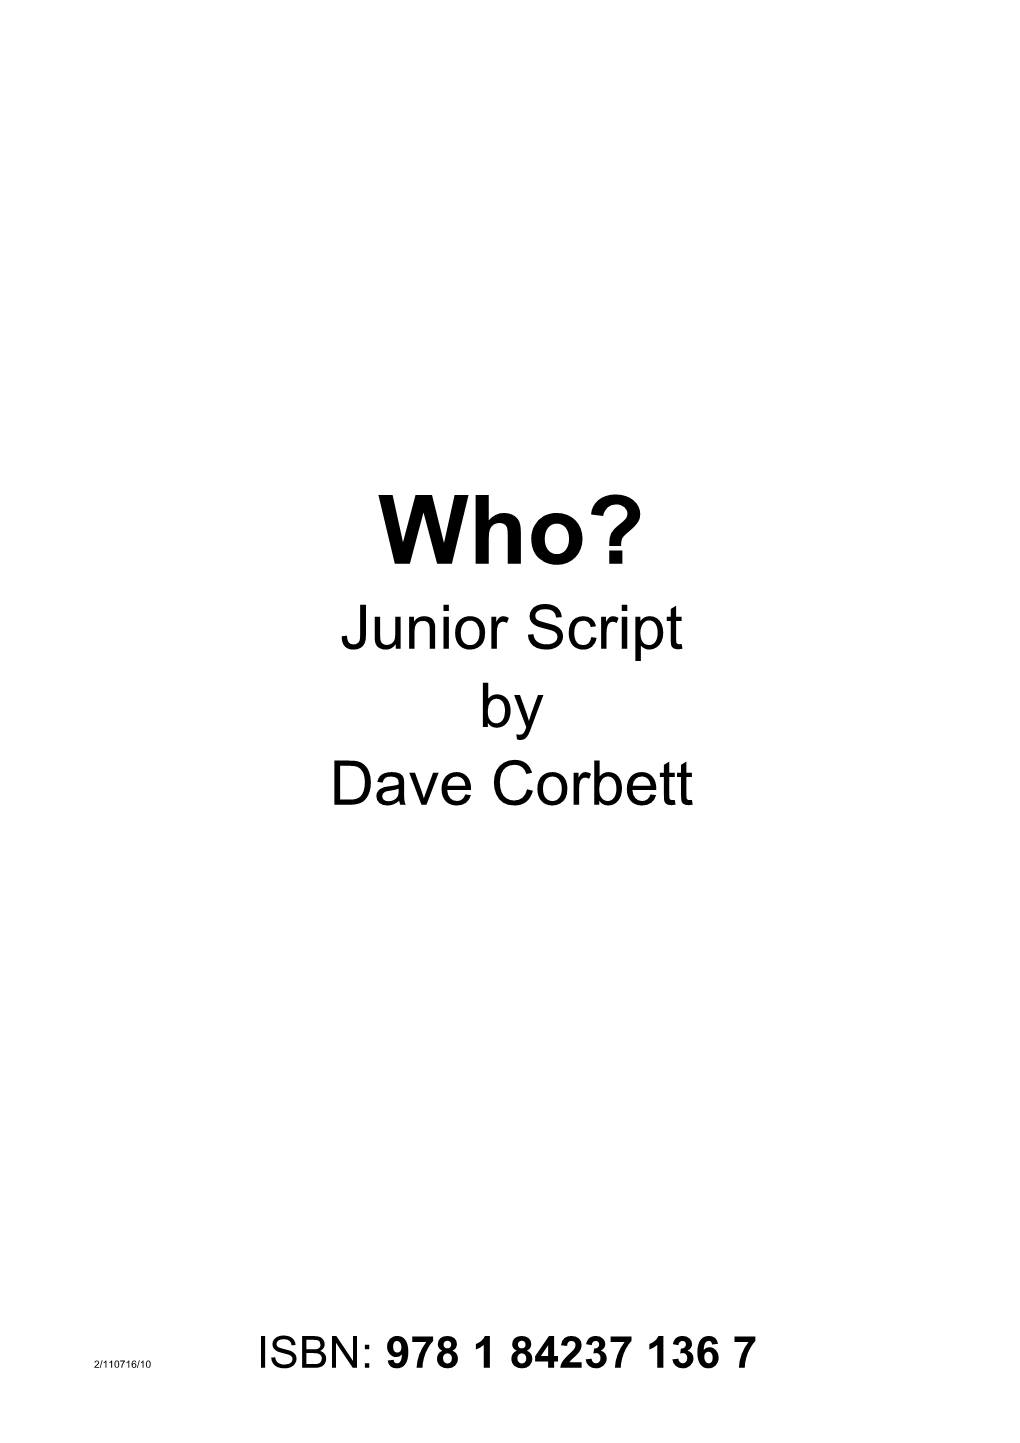 Junior Script by Dave Corbett